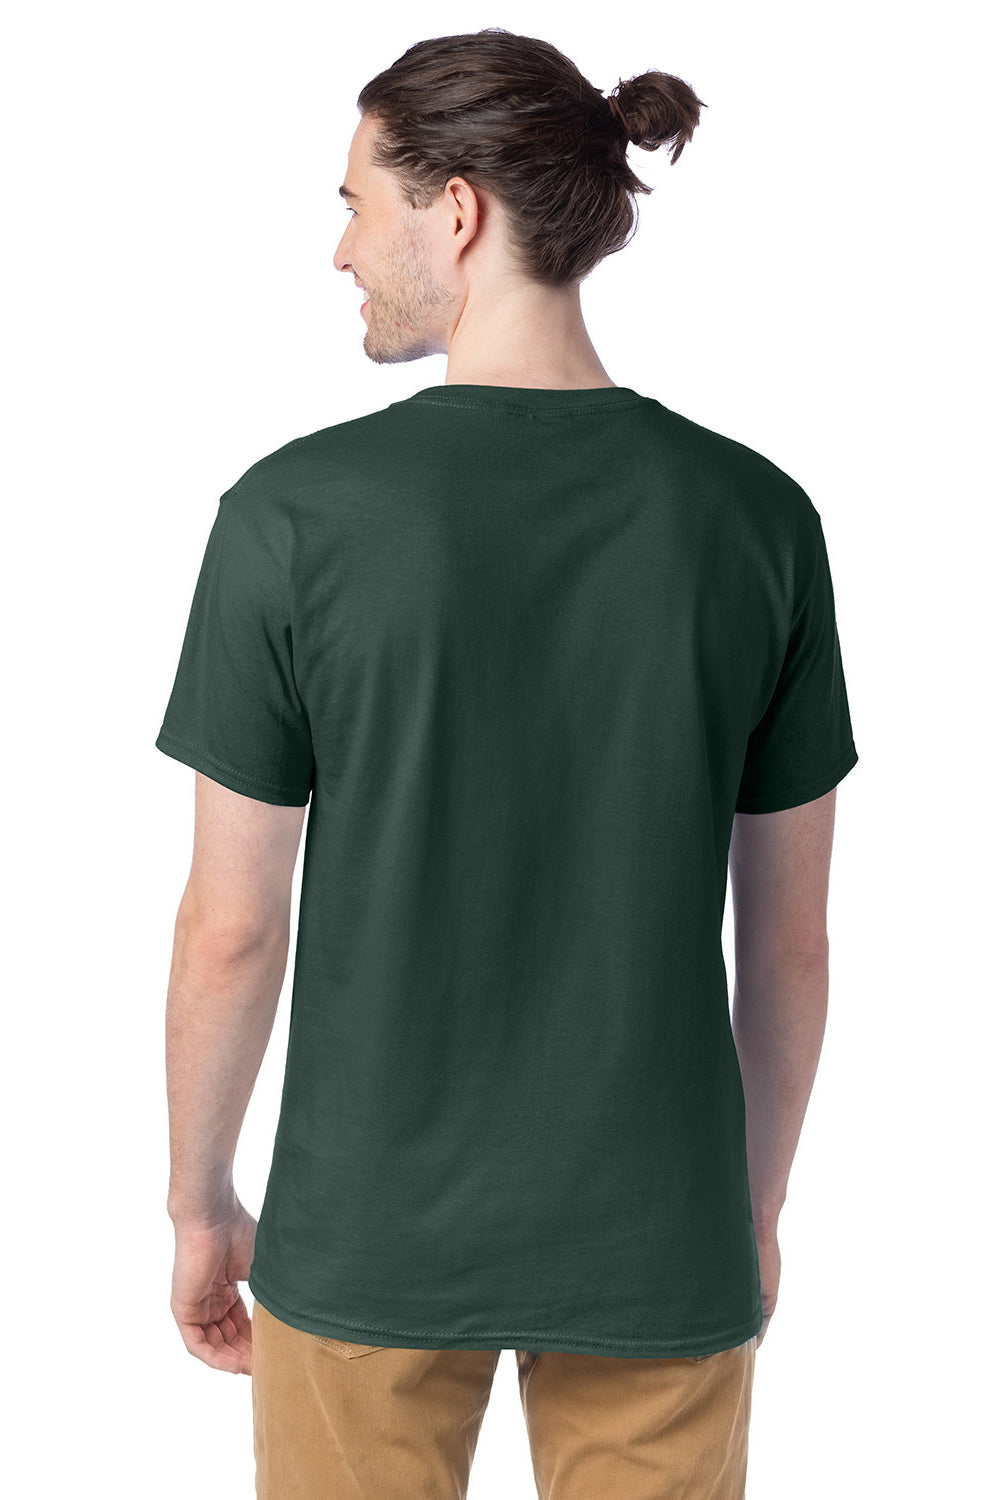 Hanes 5280 Mens ComfortSoft Short Sleeve Crewneck T-Shirt Athletic Dark Green Back